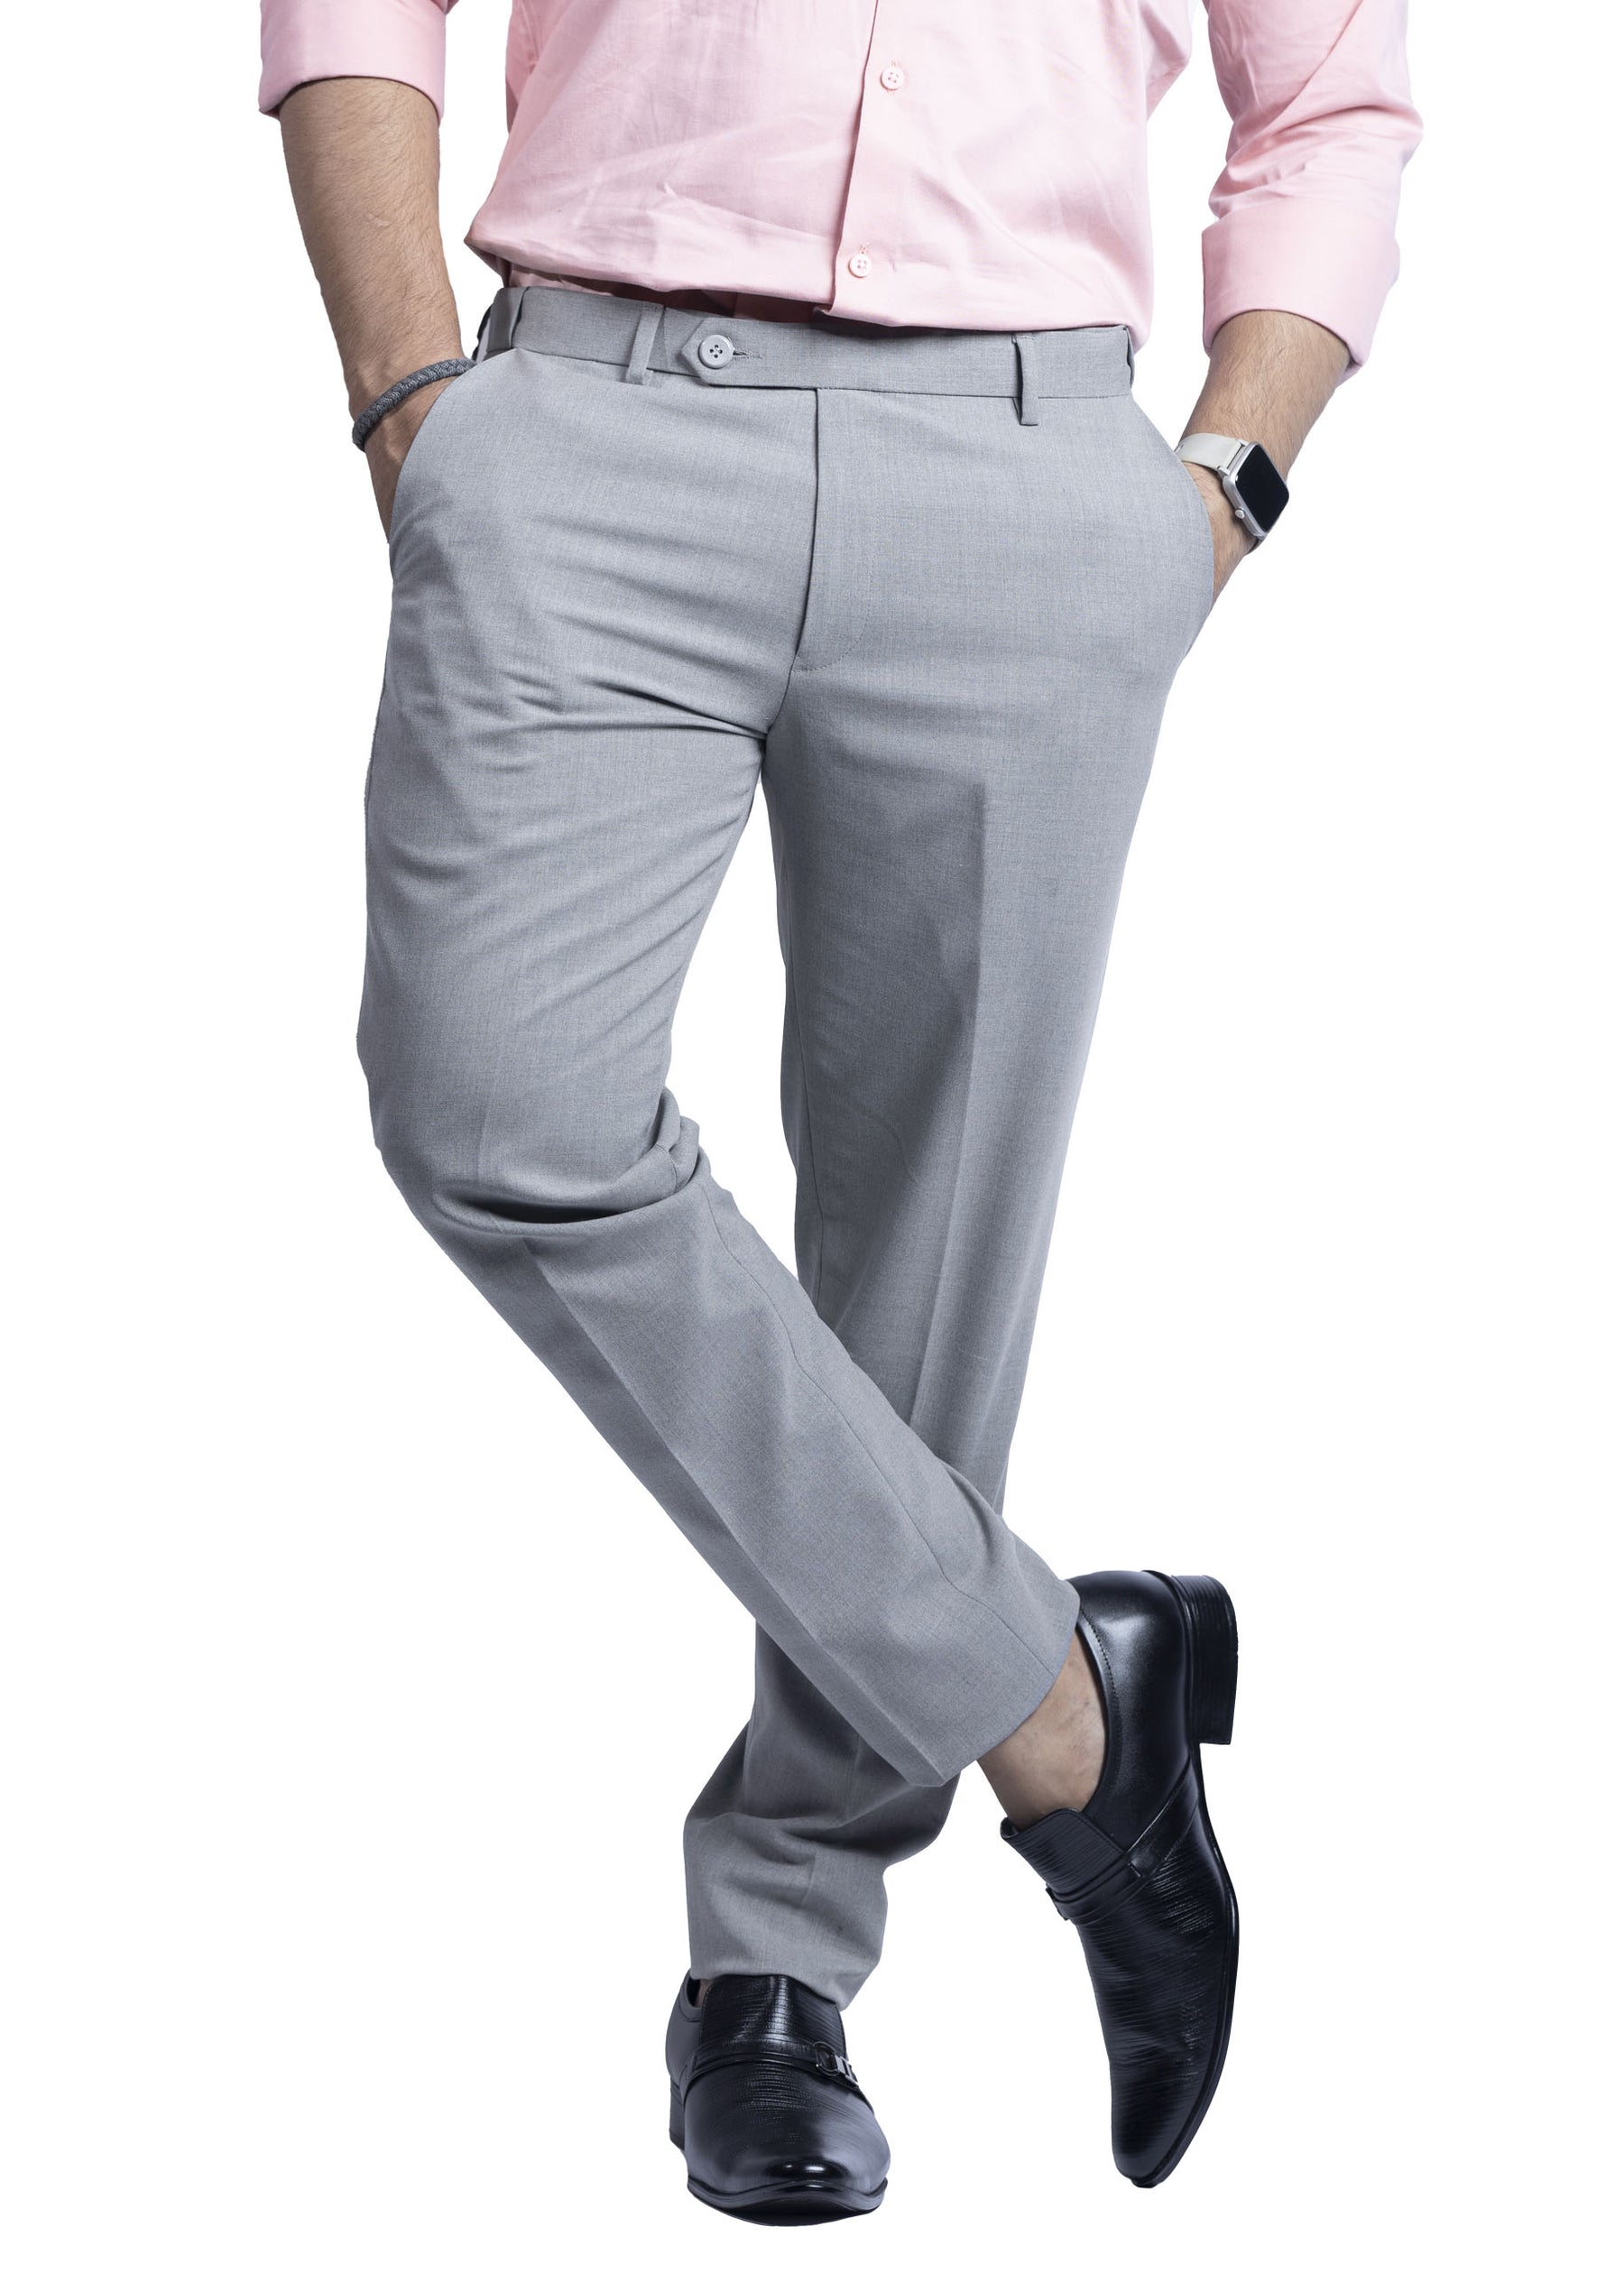 Flexiwaist Pant For Men Special Edition